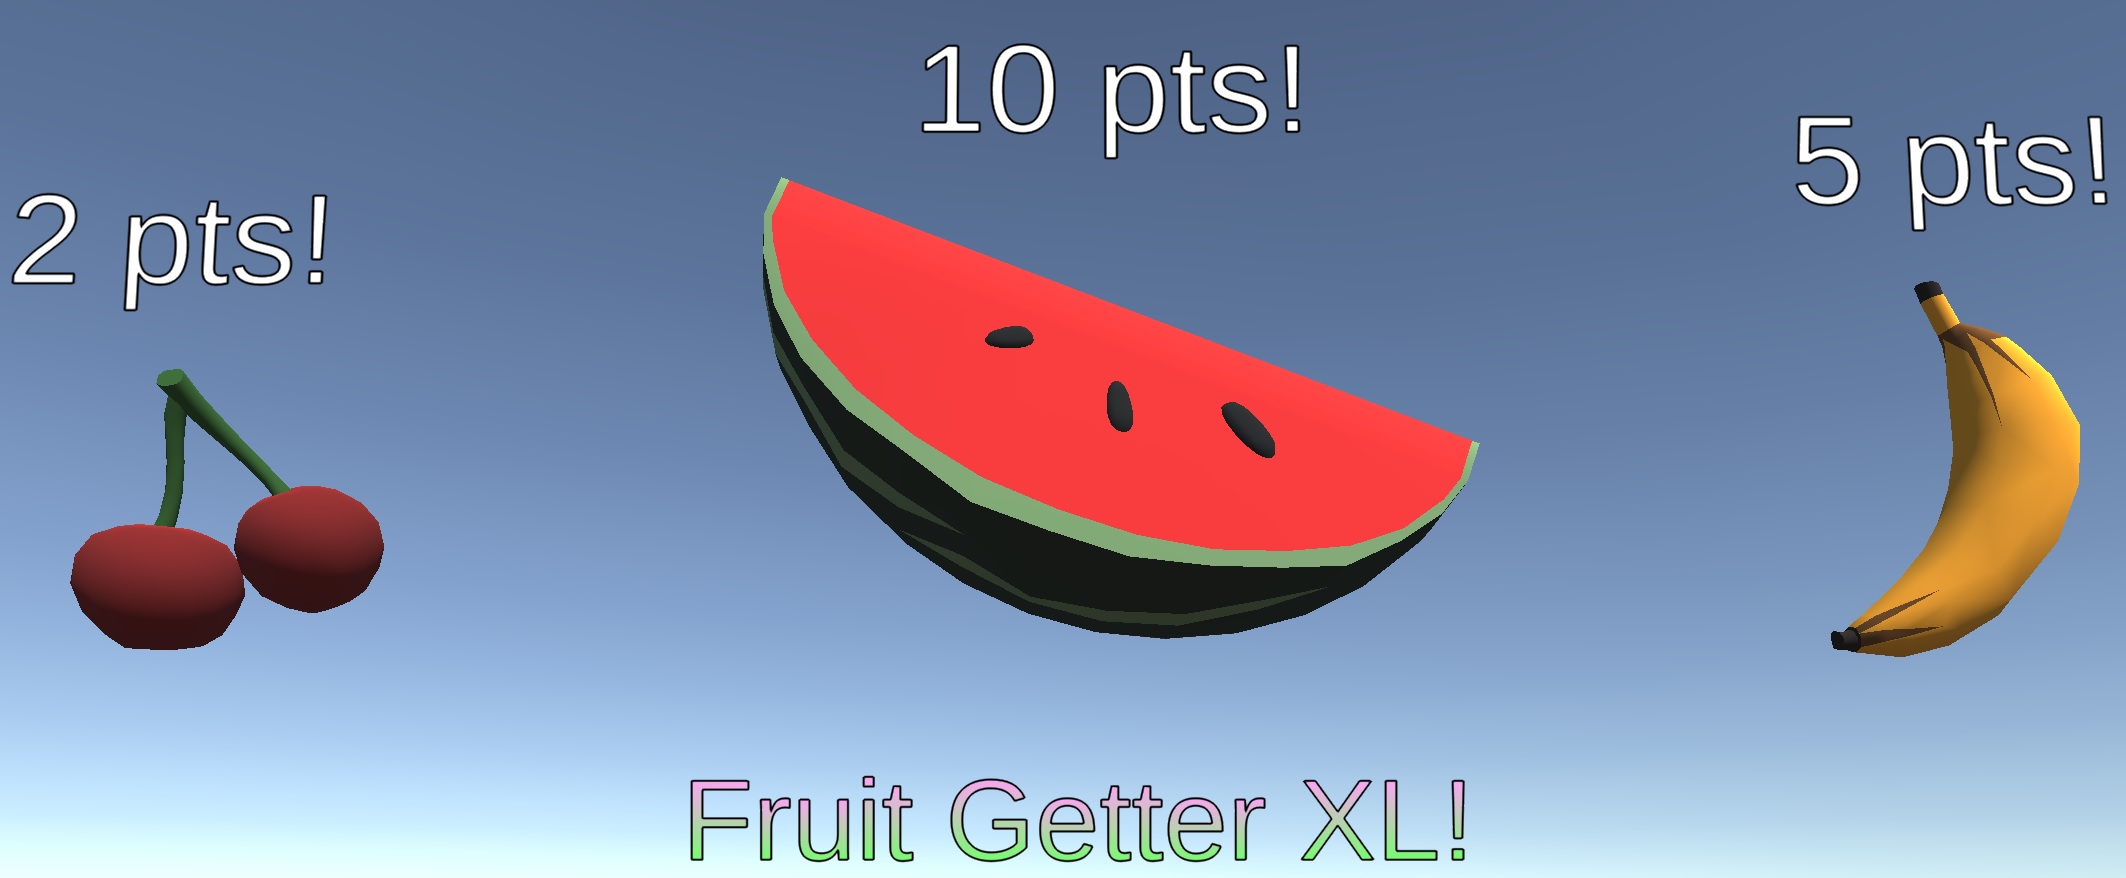 FruitGetterXL